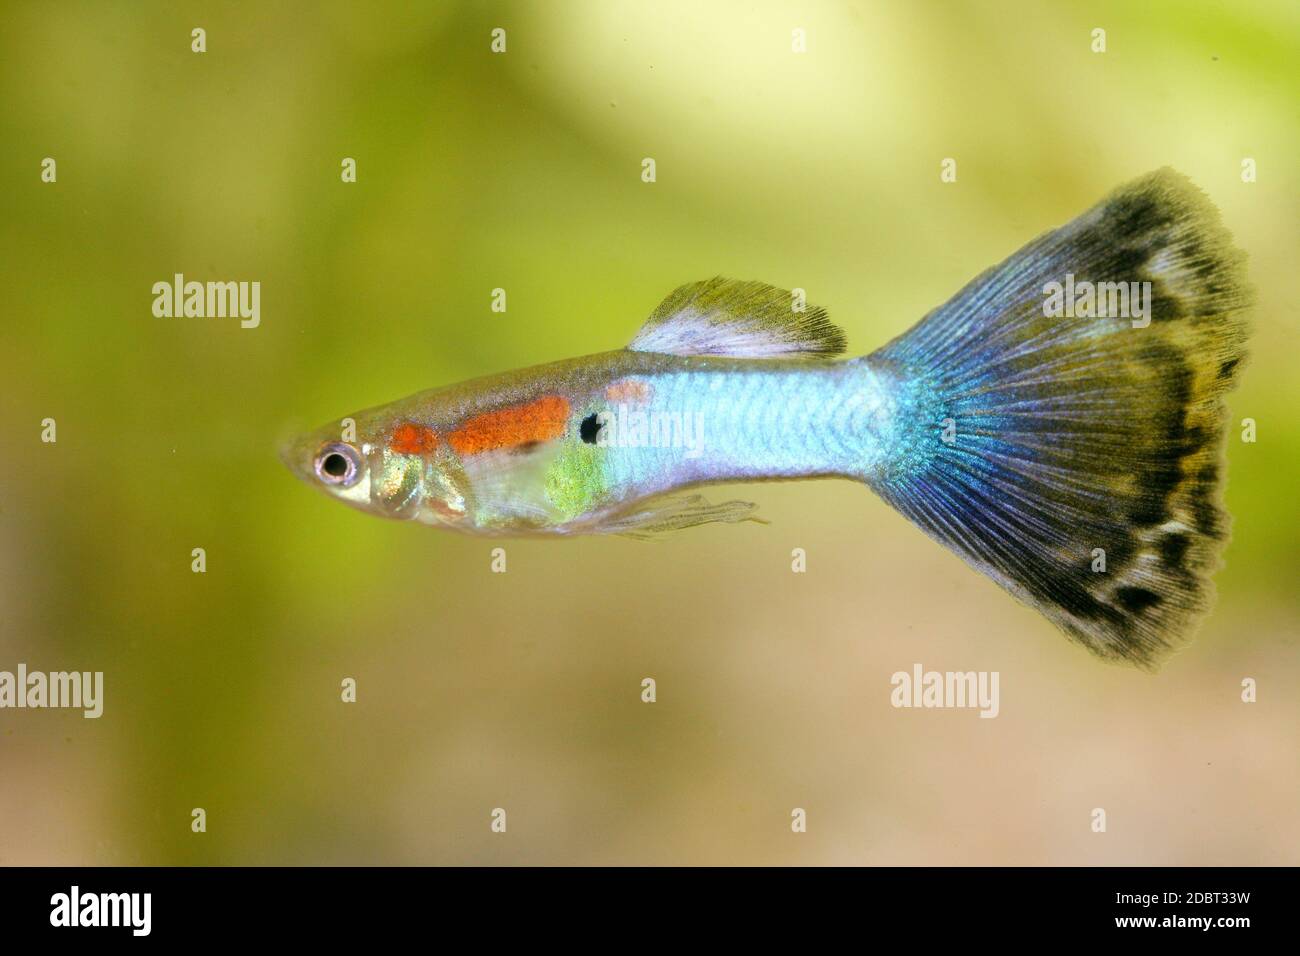 Aquarium fish birth hi-res stock photography and images - Alamy